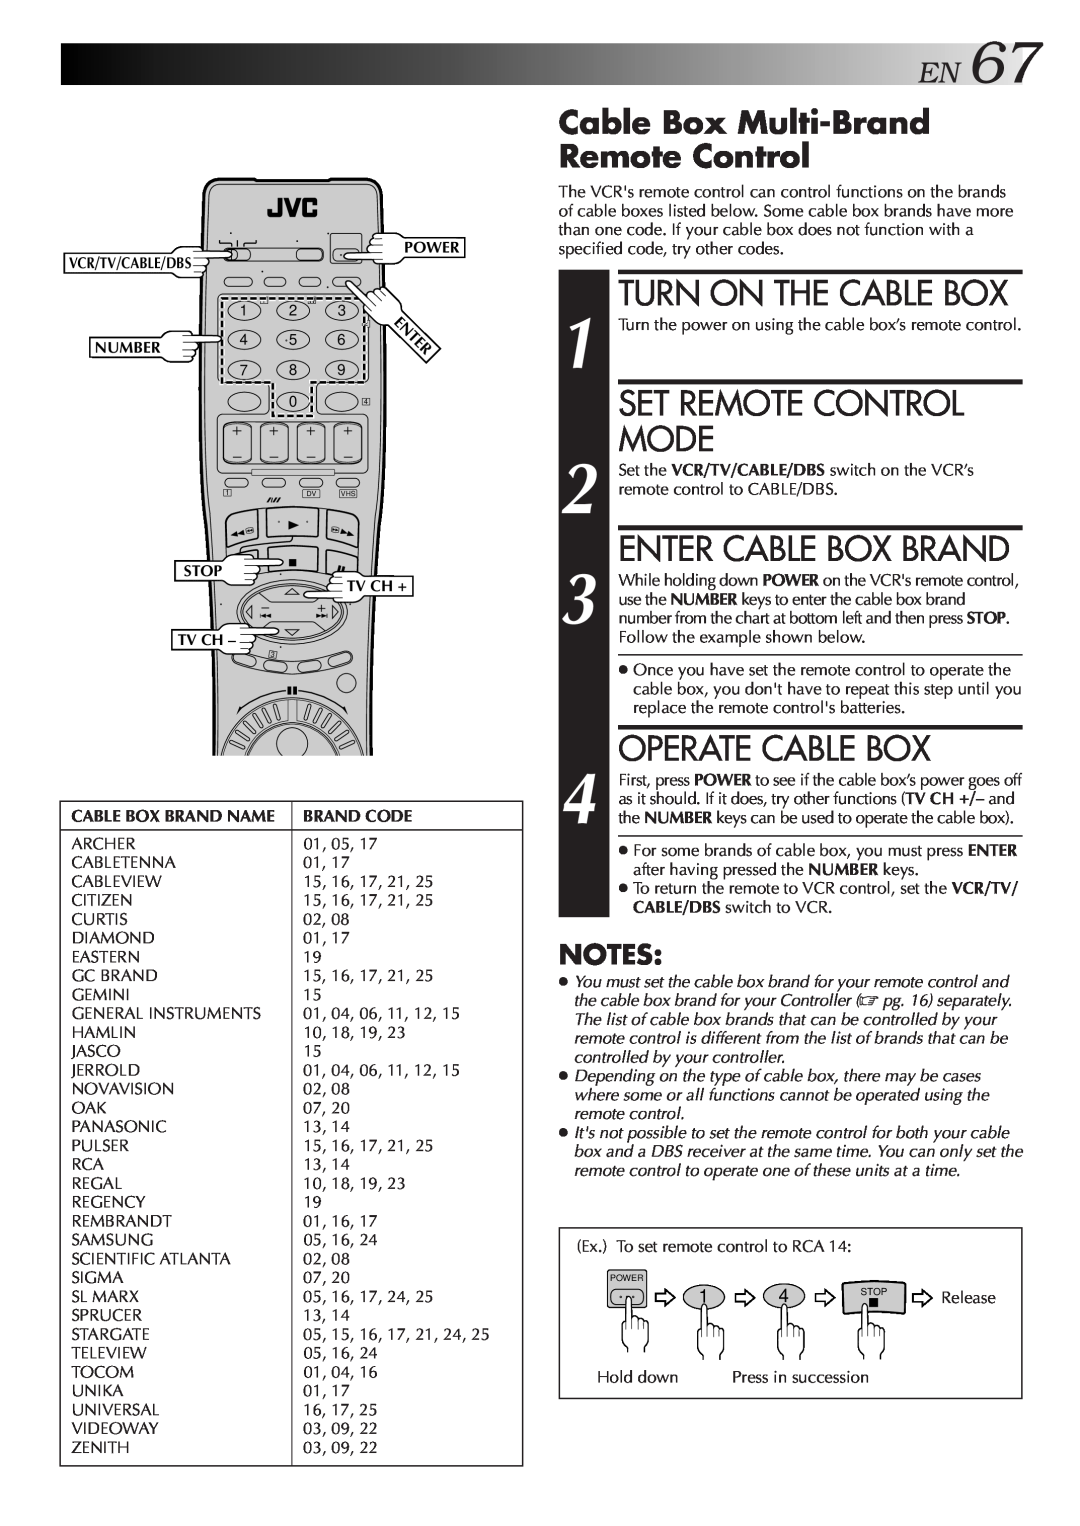 JVC SR-VS10U Turn On The Cable Box, Operate Cable Box, Cable Box Multi-Brand Remote Control, EN67, Set Remote Control Mode 